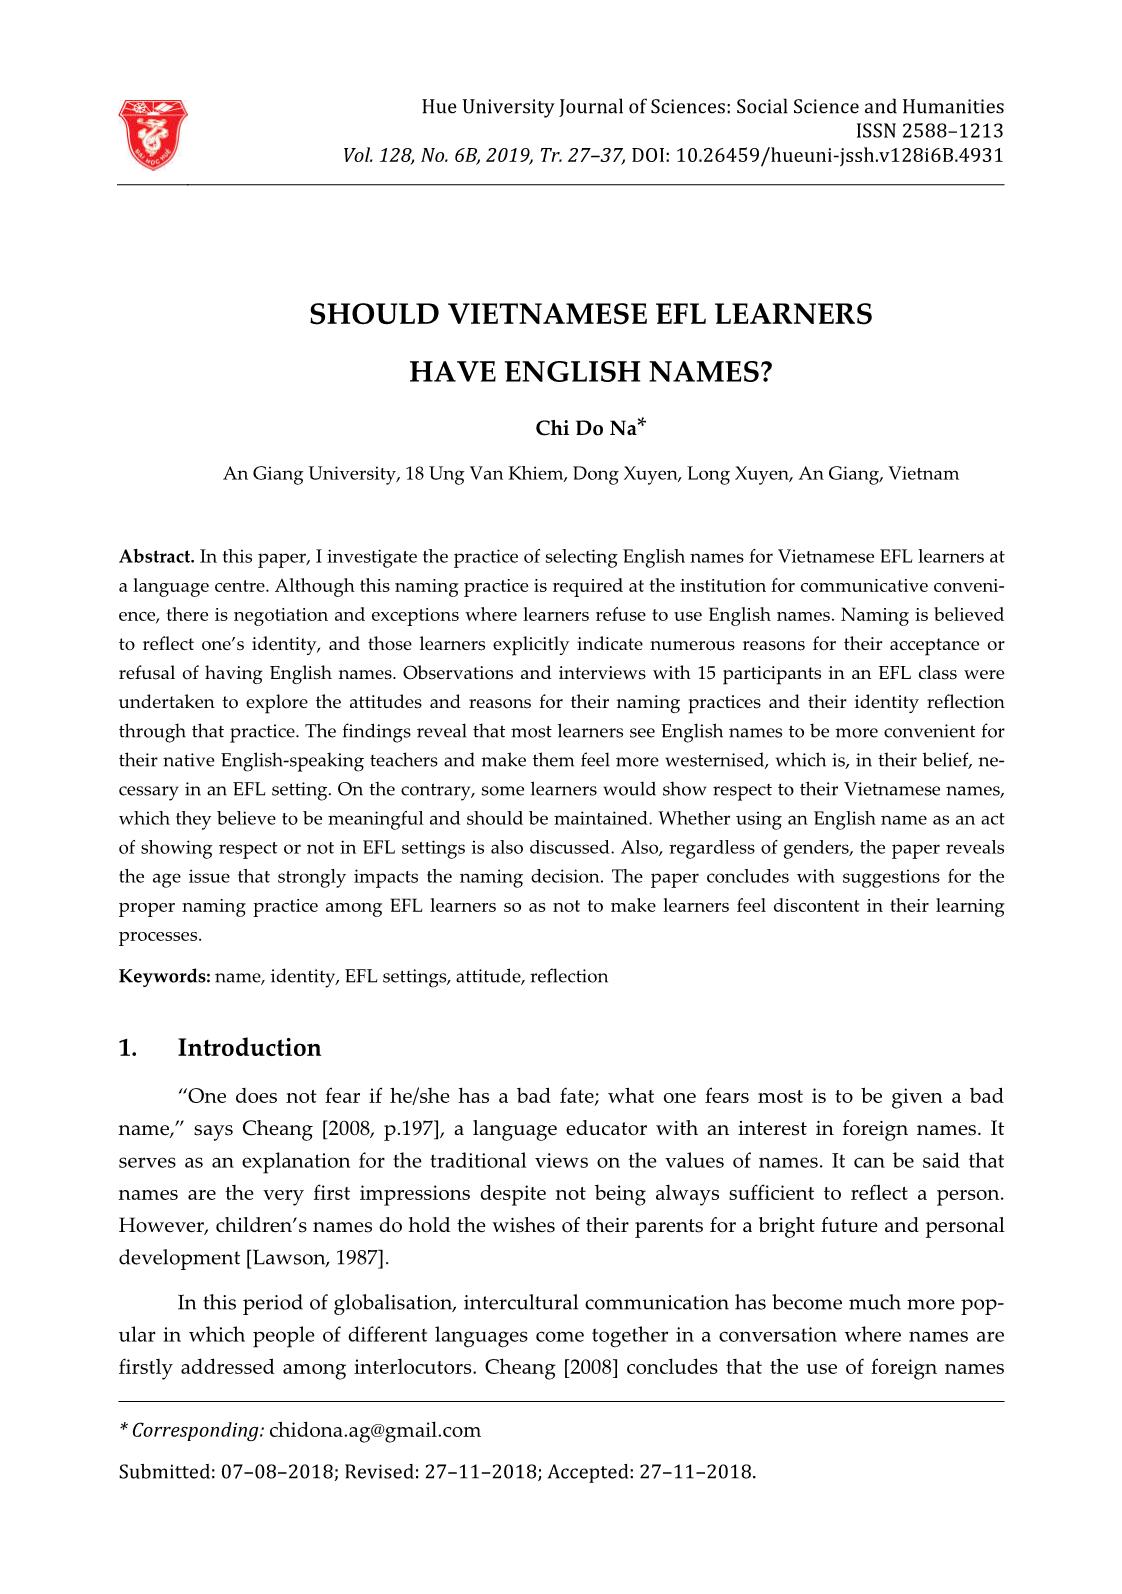 Should Vietnamese EFL learners have English names? trang 1